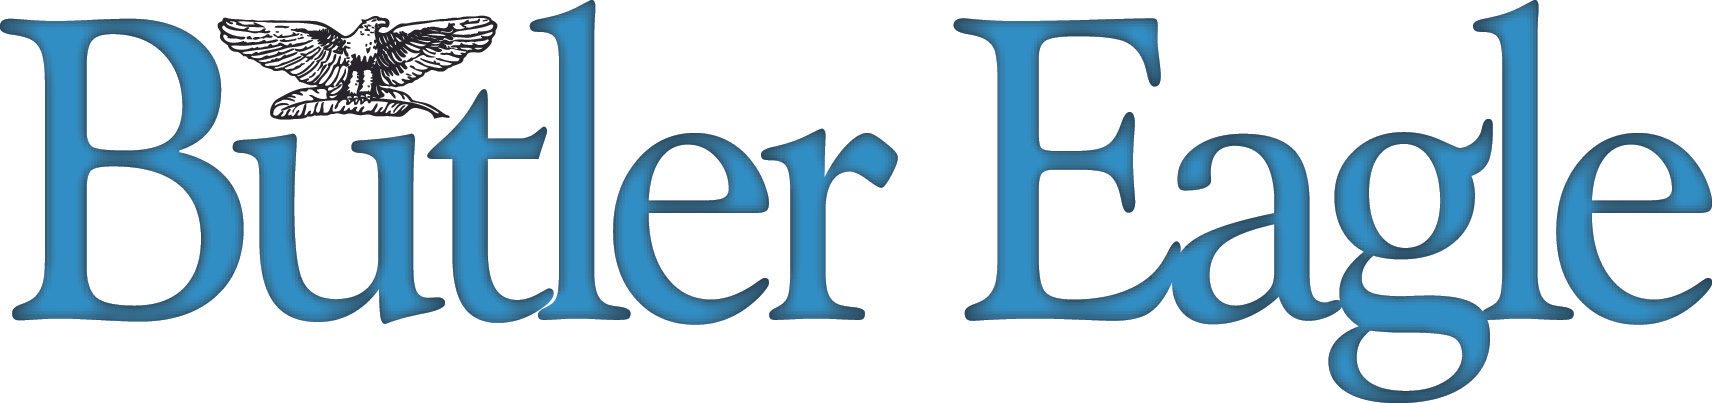 Butler Eagle logo Blue.jpg